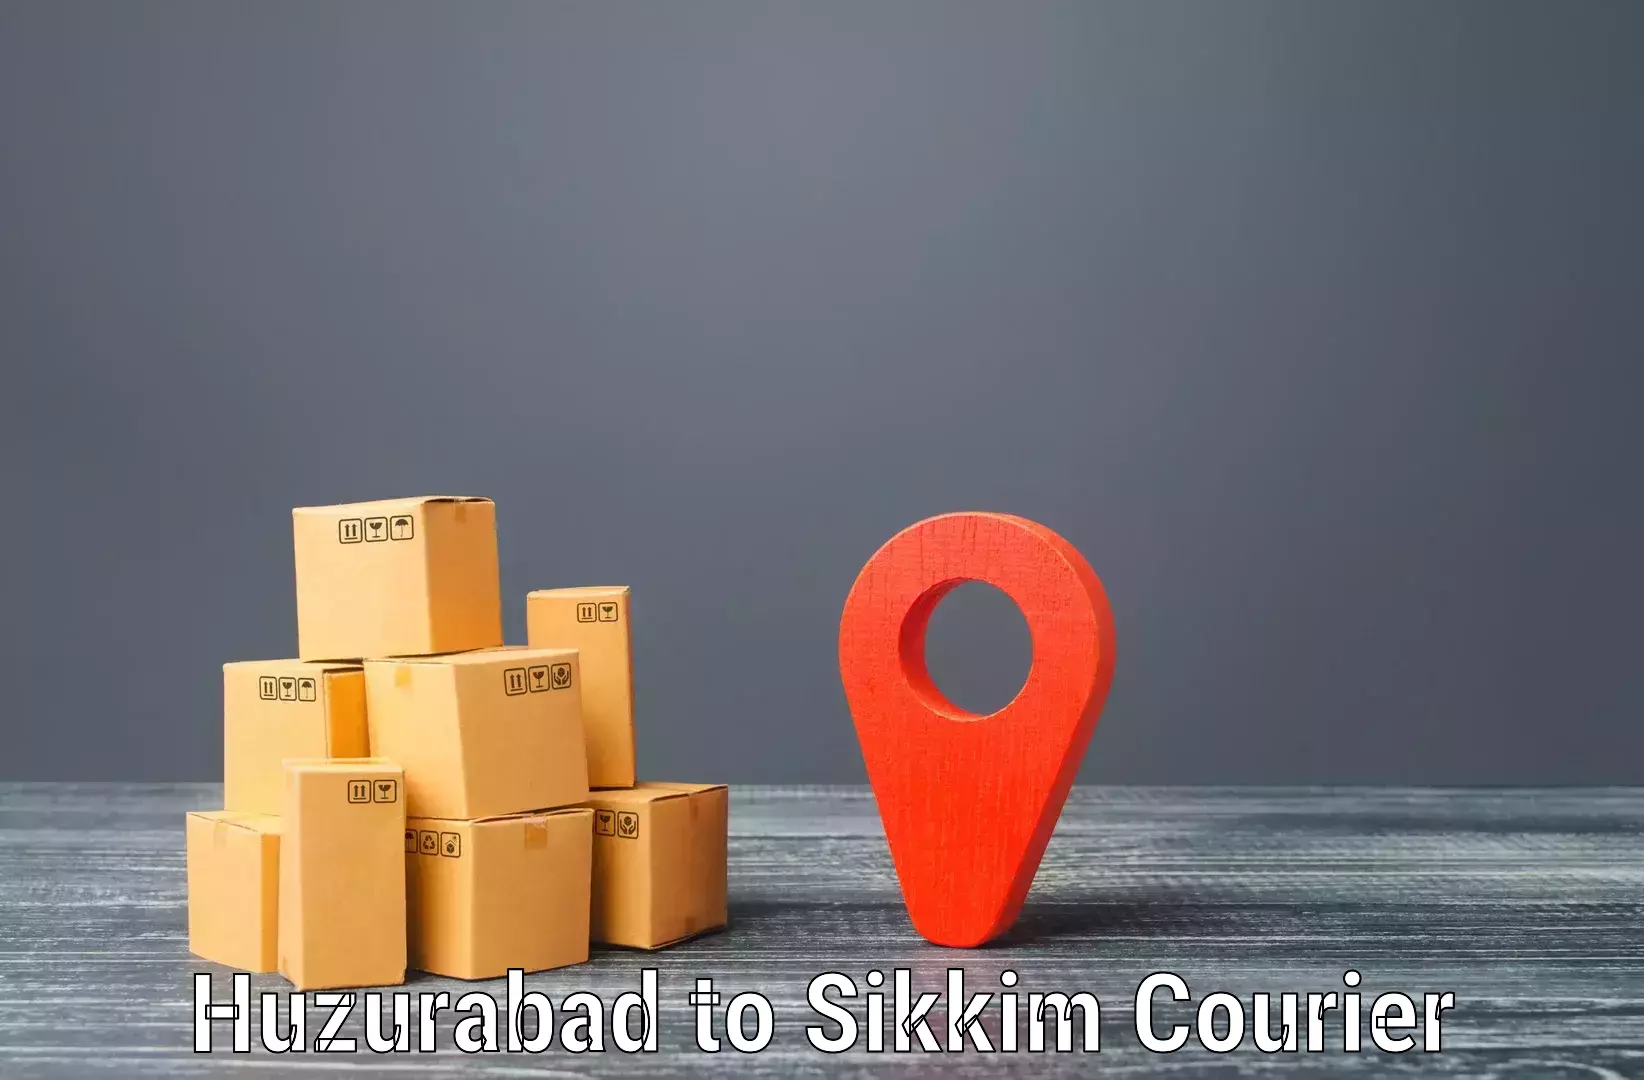 Customer-centric shipping in Huzurabad to Geyzing